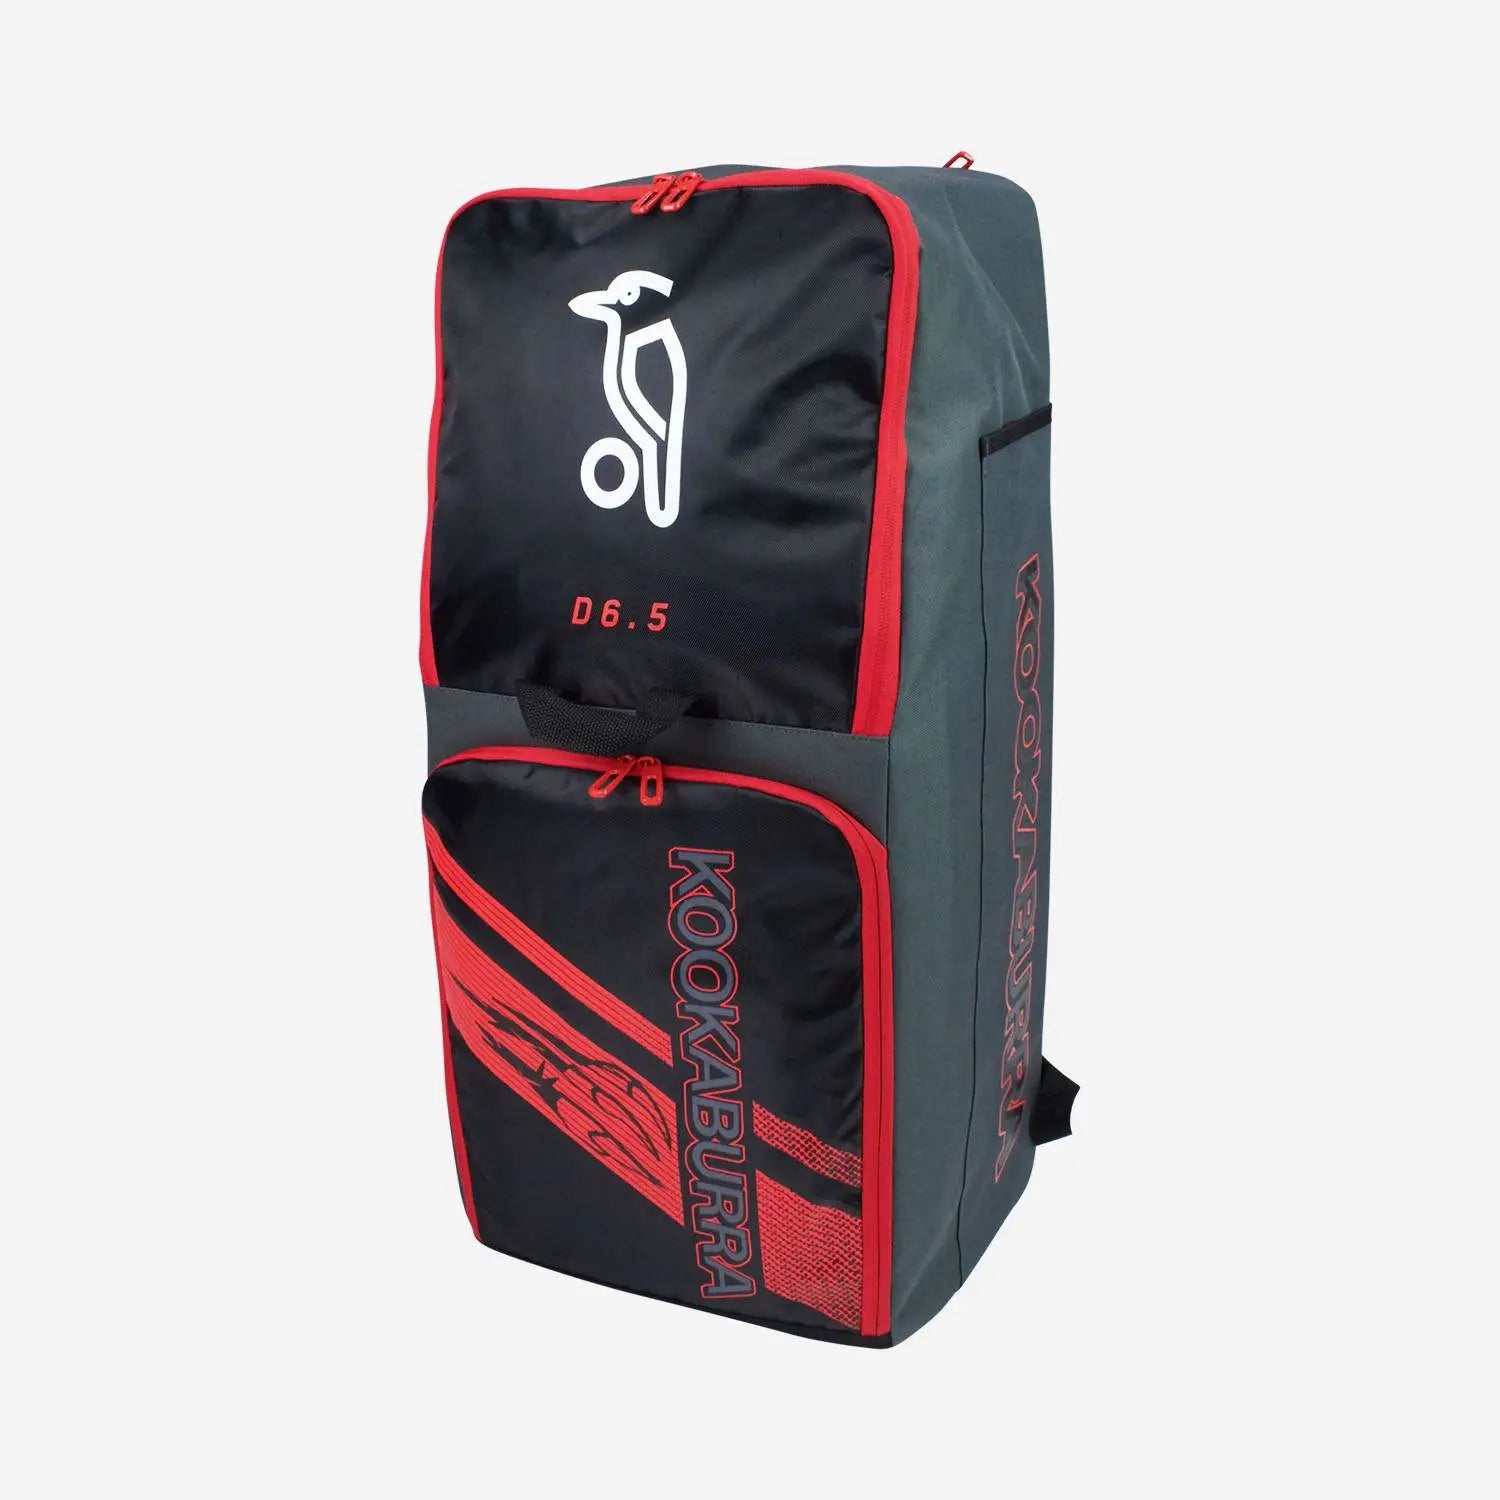 Cricket Kit Bag Wheelie Pro 2000 Colors Lime/Black by Kookaburra